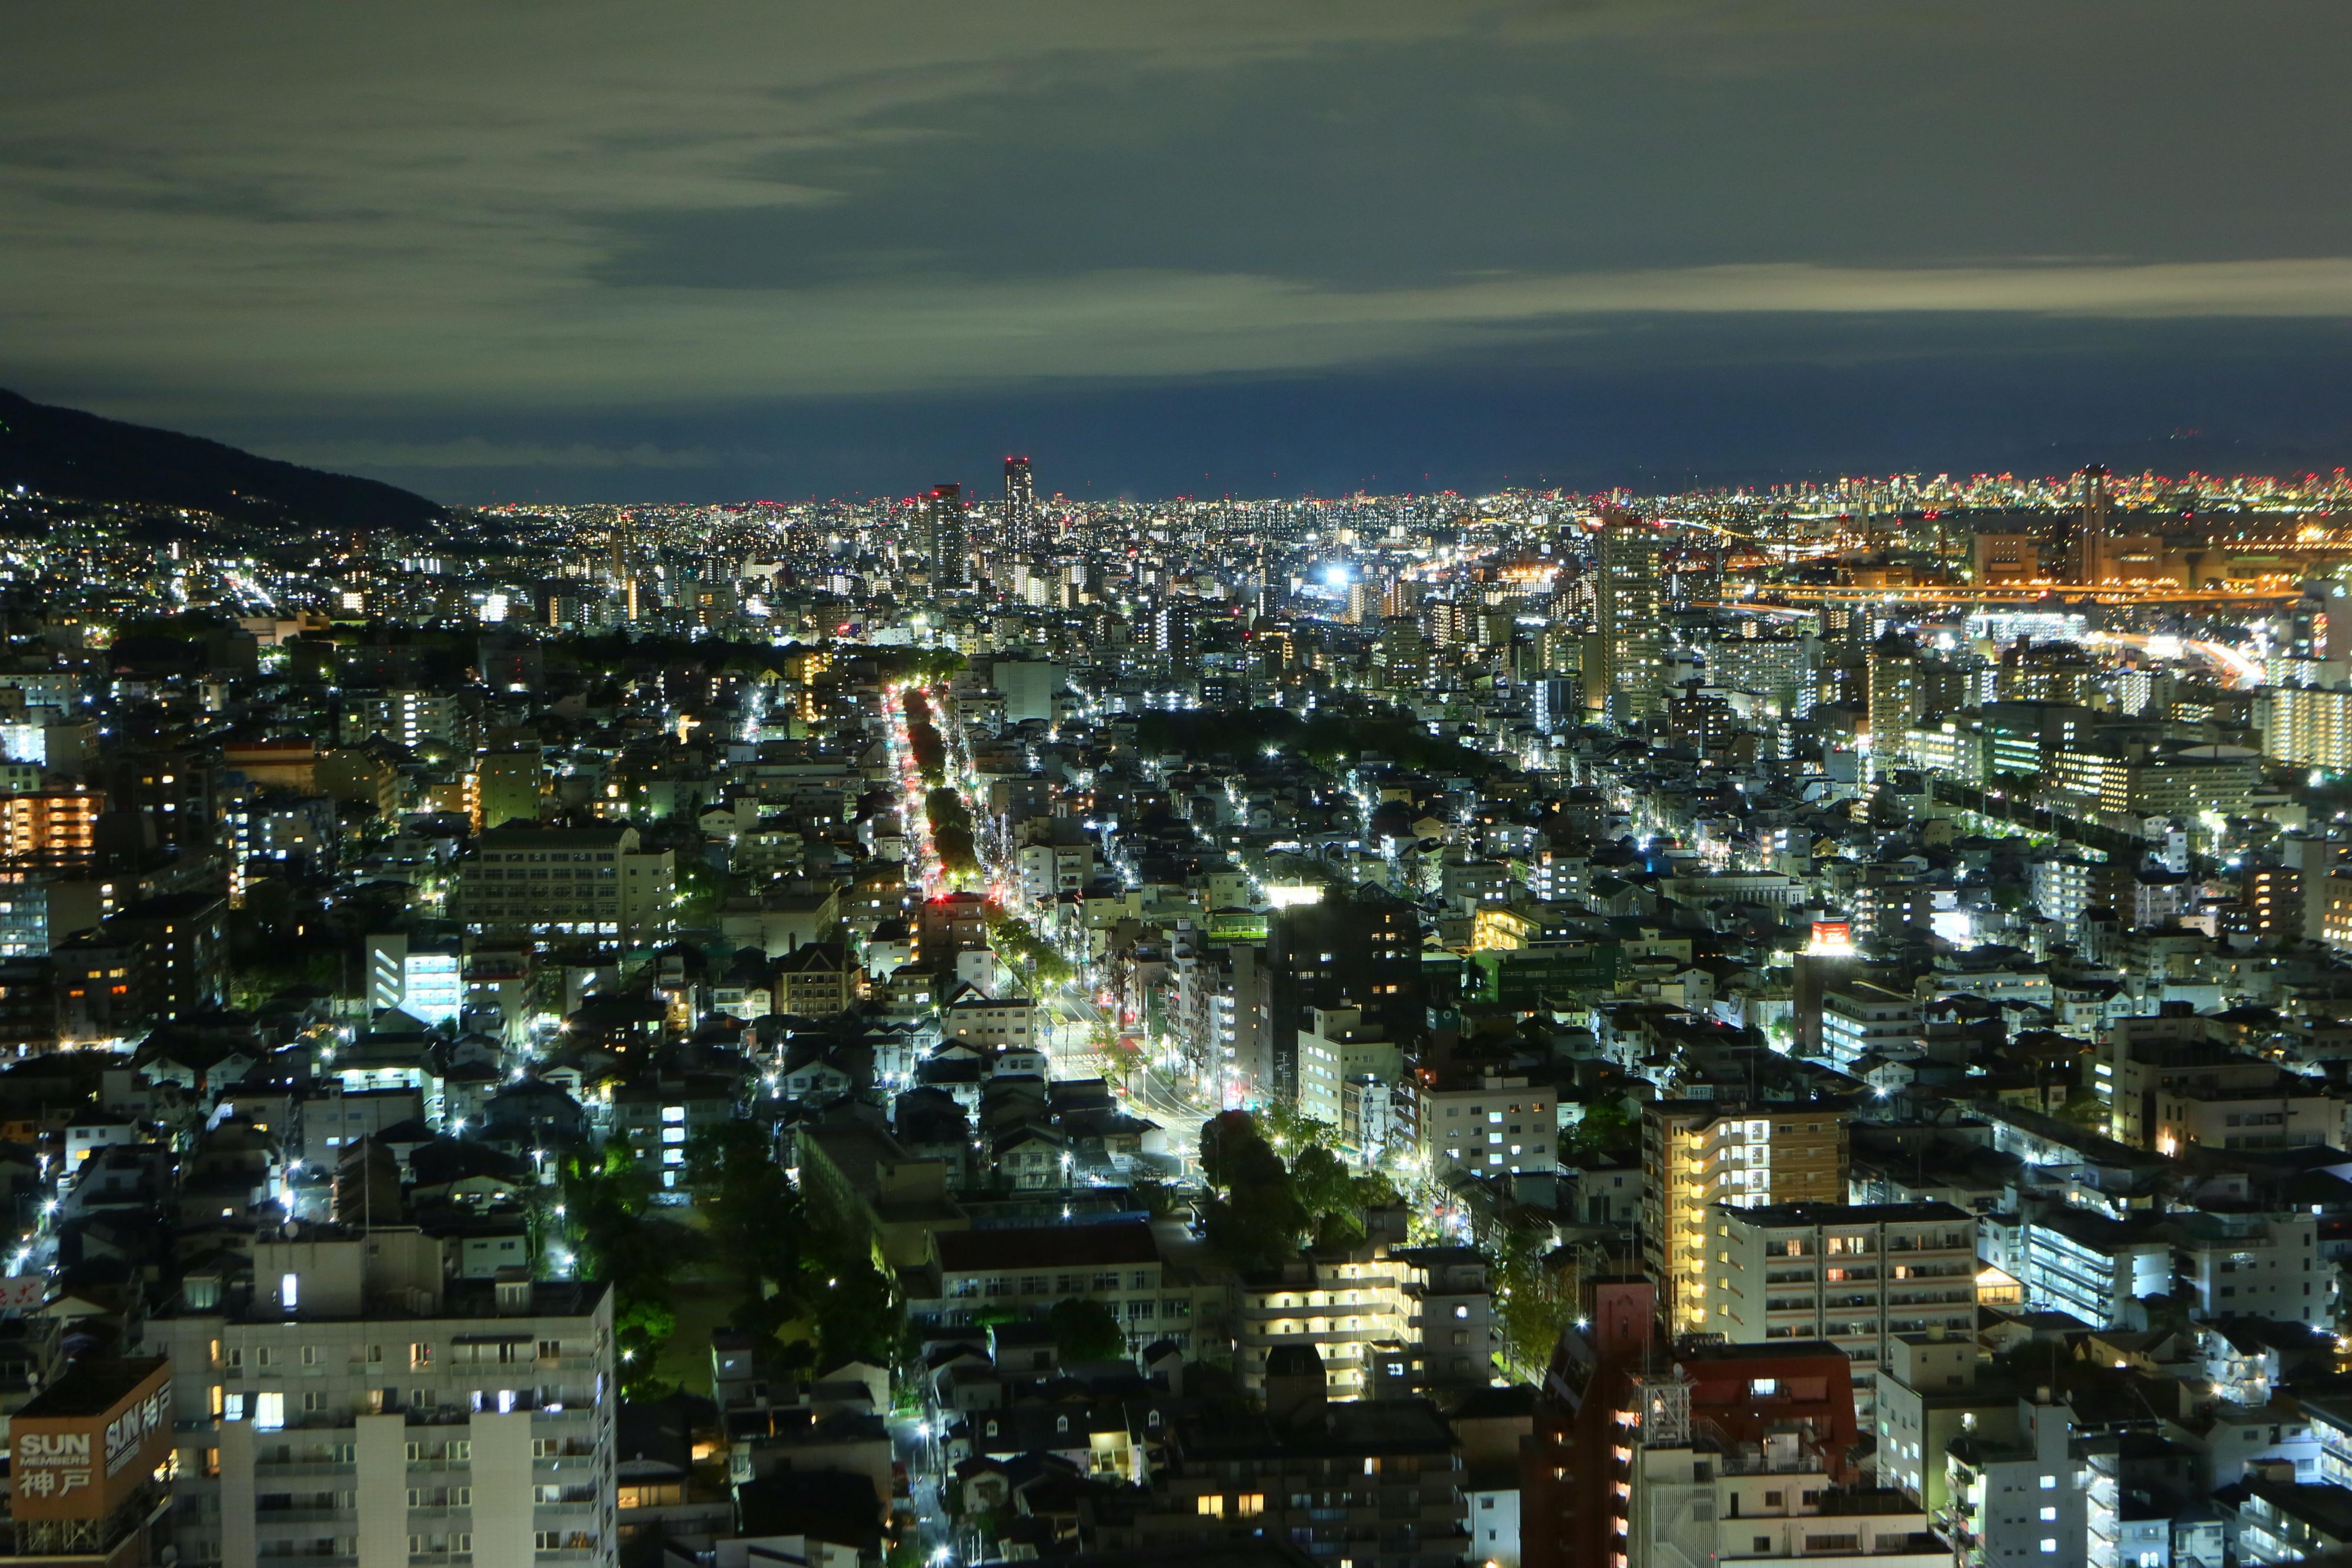 Offering great night views of Kobe City